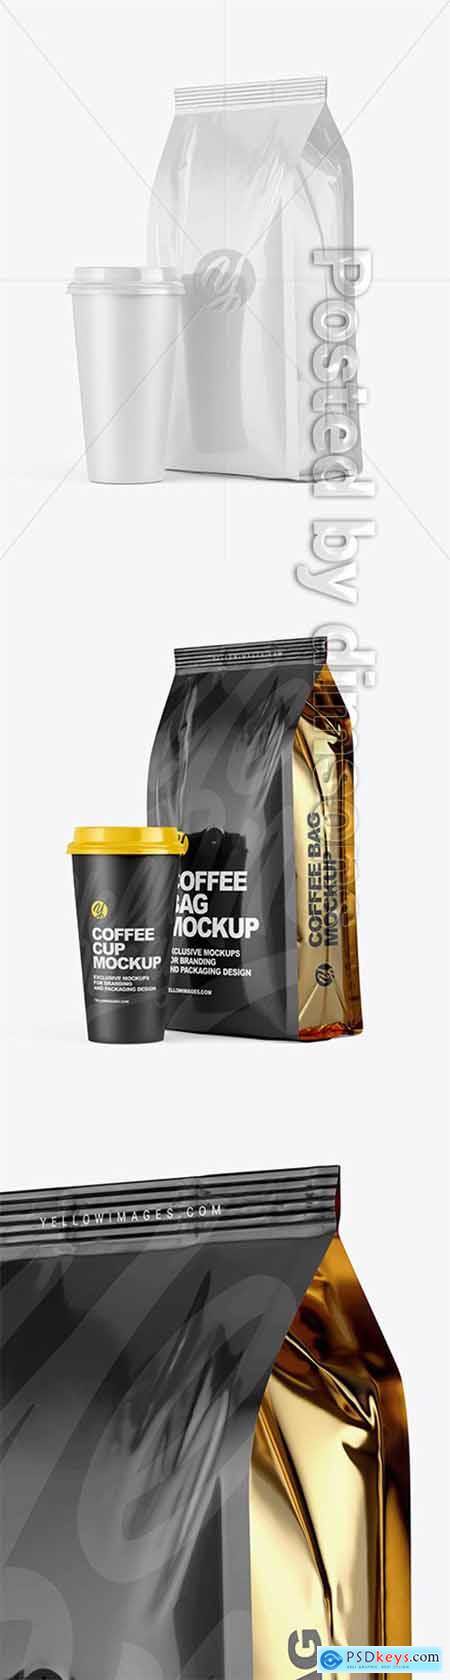 Glossy Bag with Coffee Cup Mockup 64760